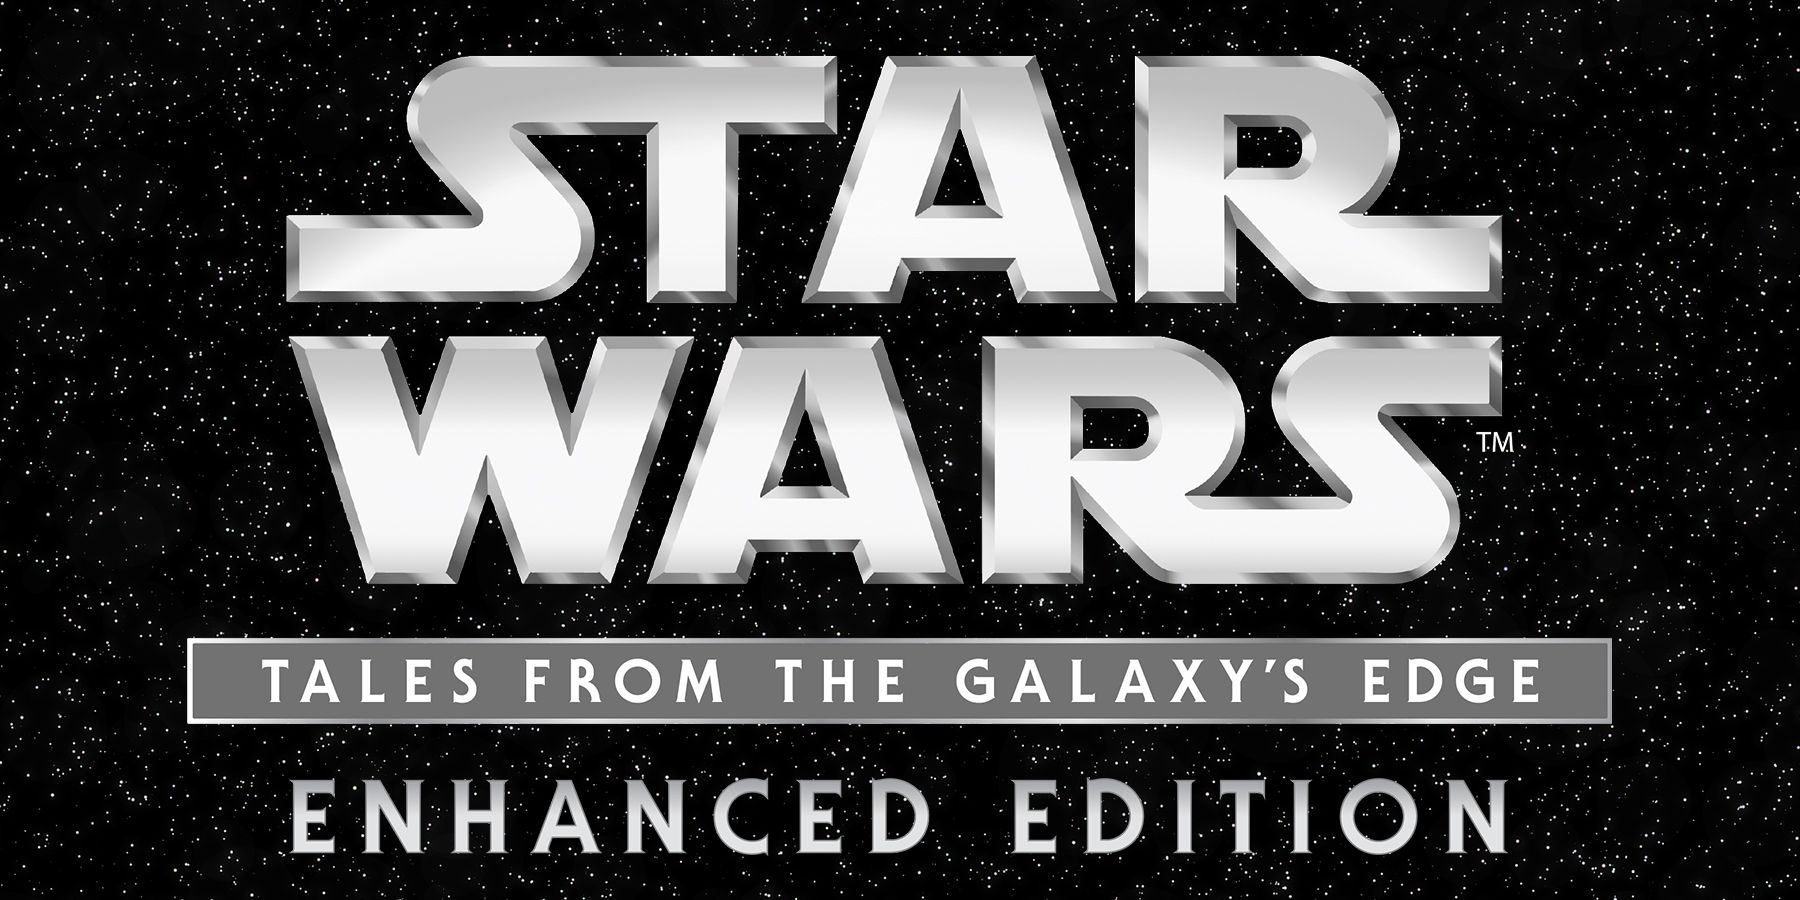 galaxys-edge-enhanced-edition-logo